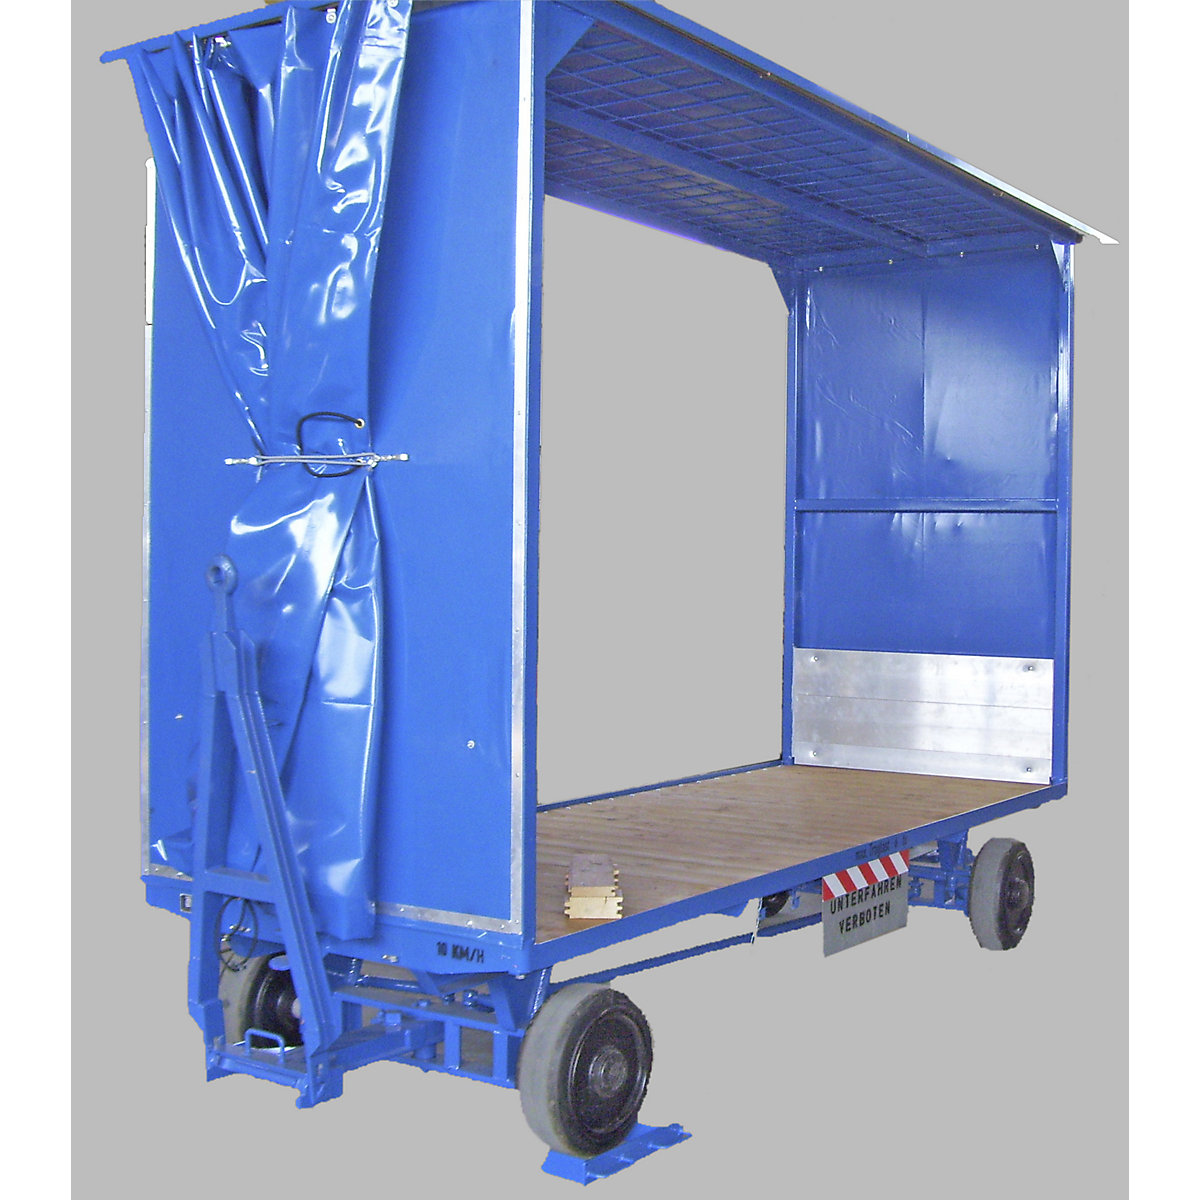 Heavy goods trailer (Product illustration 13)